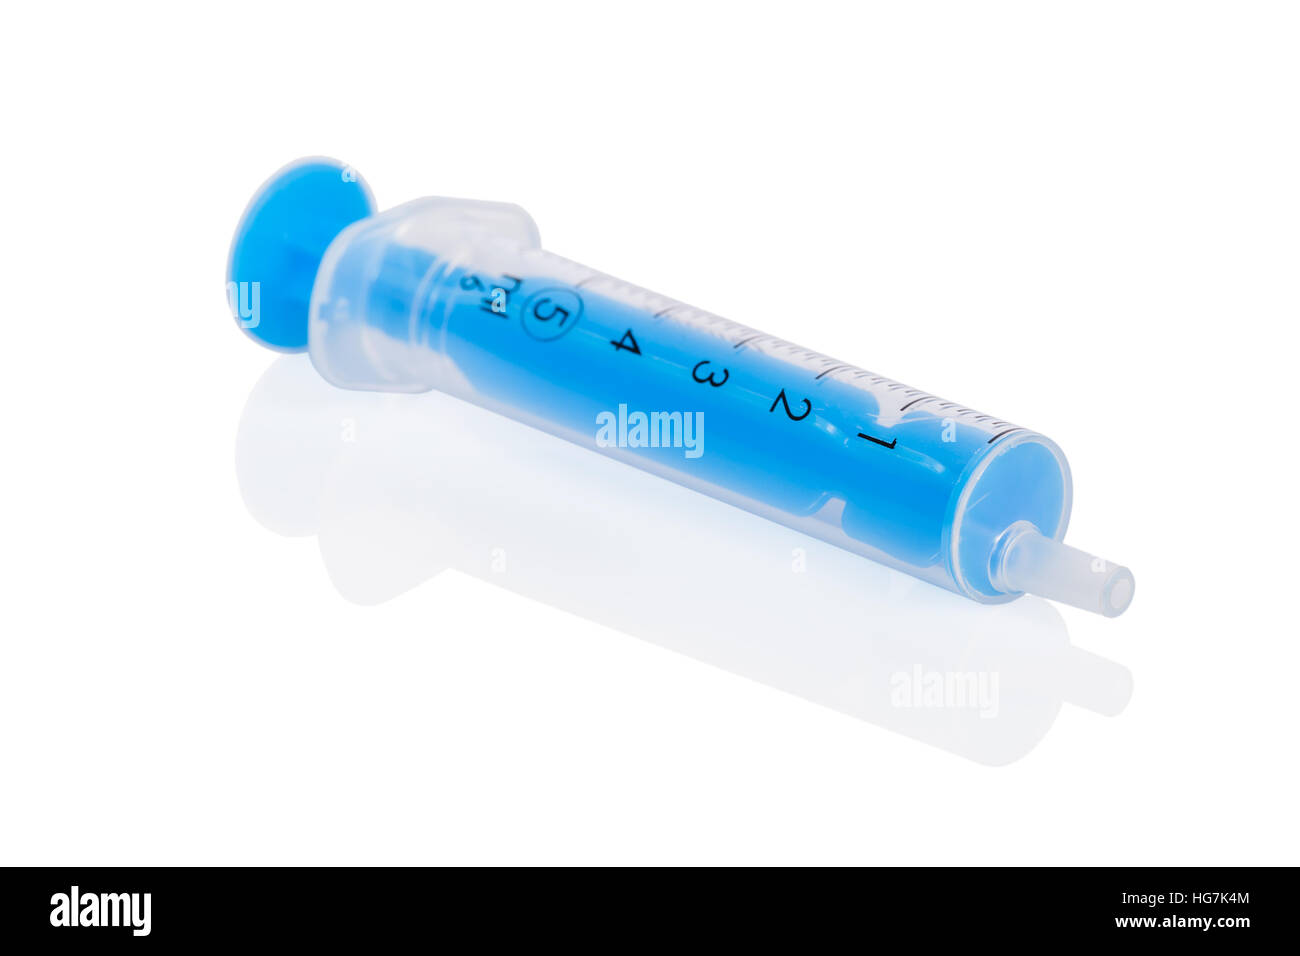 Disposable syringe -Fotos und -Bildmaterial in hoher Auflösung – Alamy